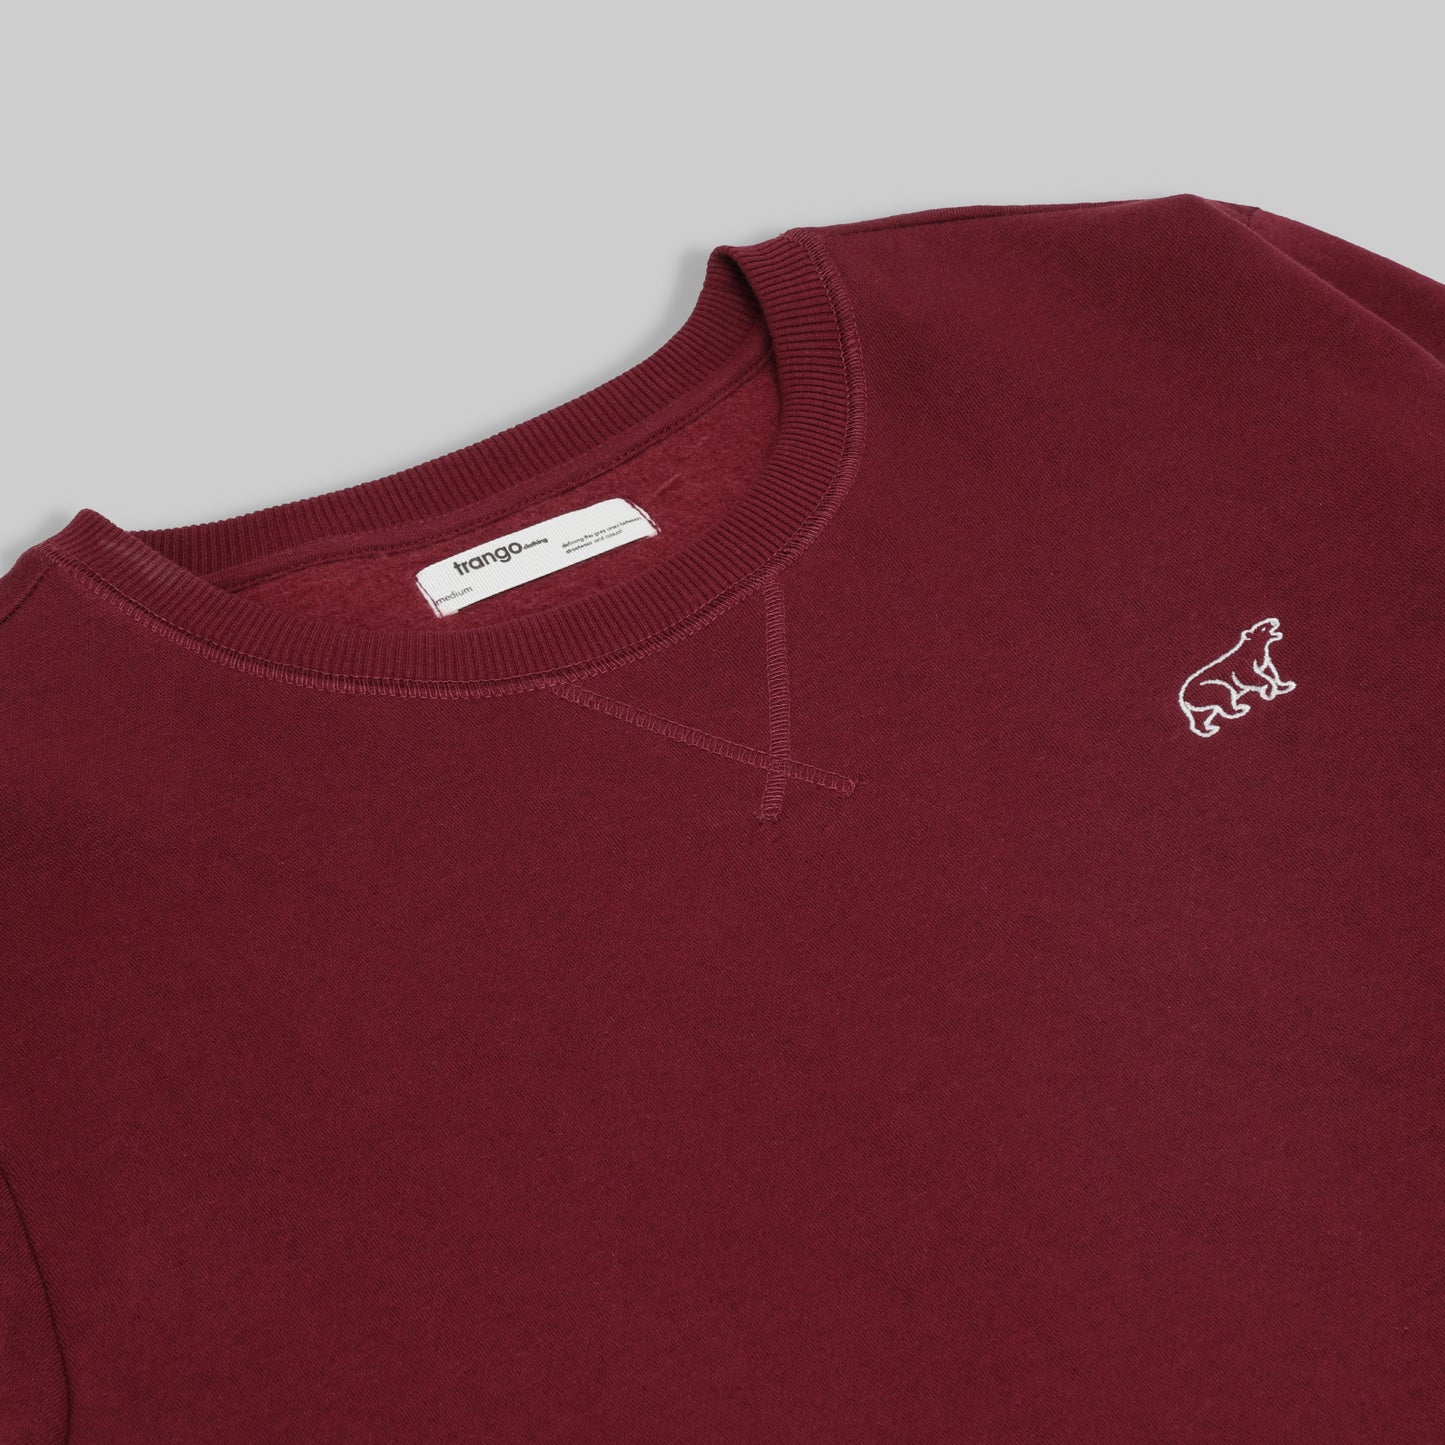 Polarbear Sweatshirt - Crimson